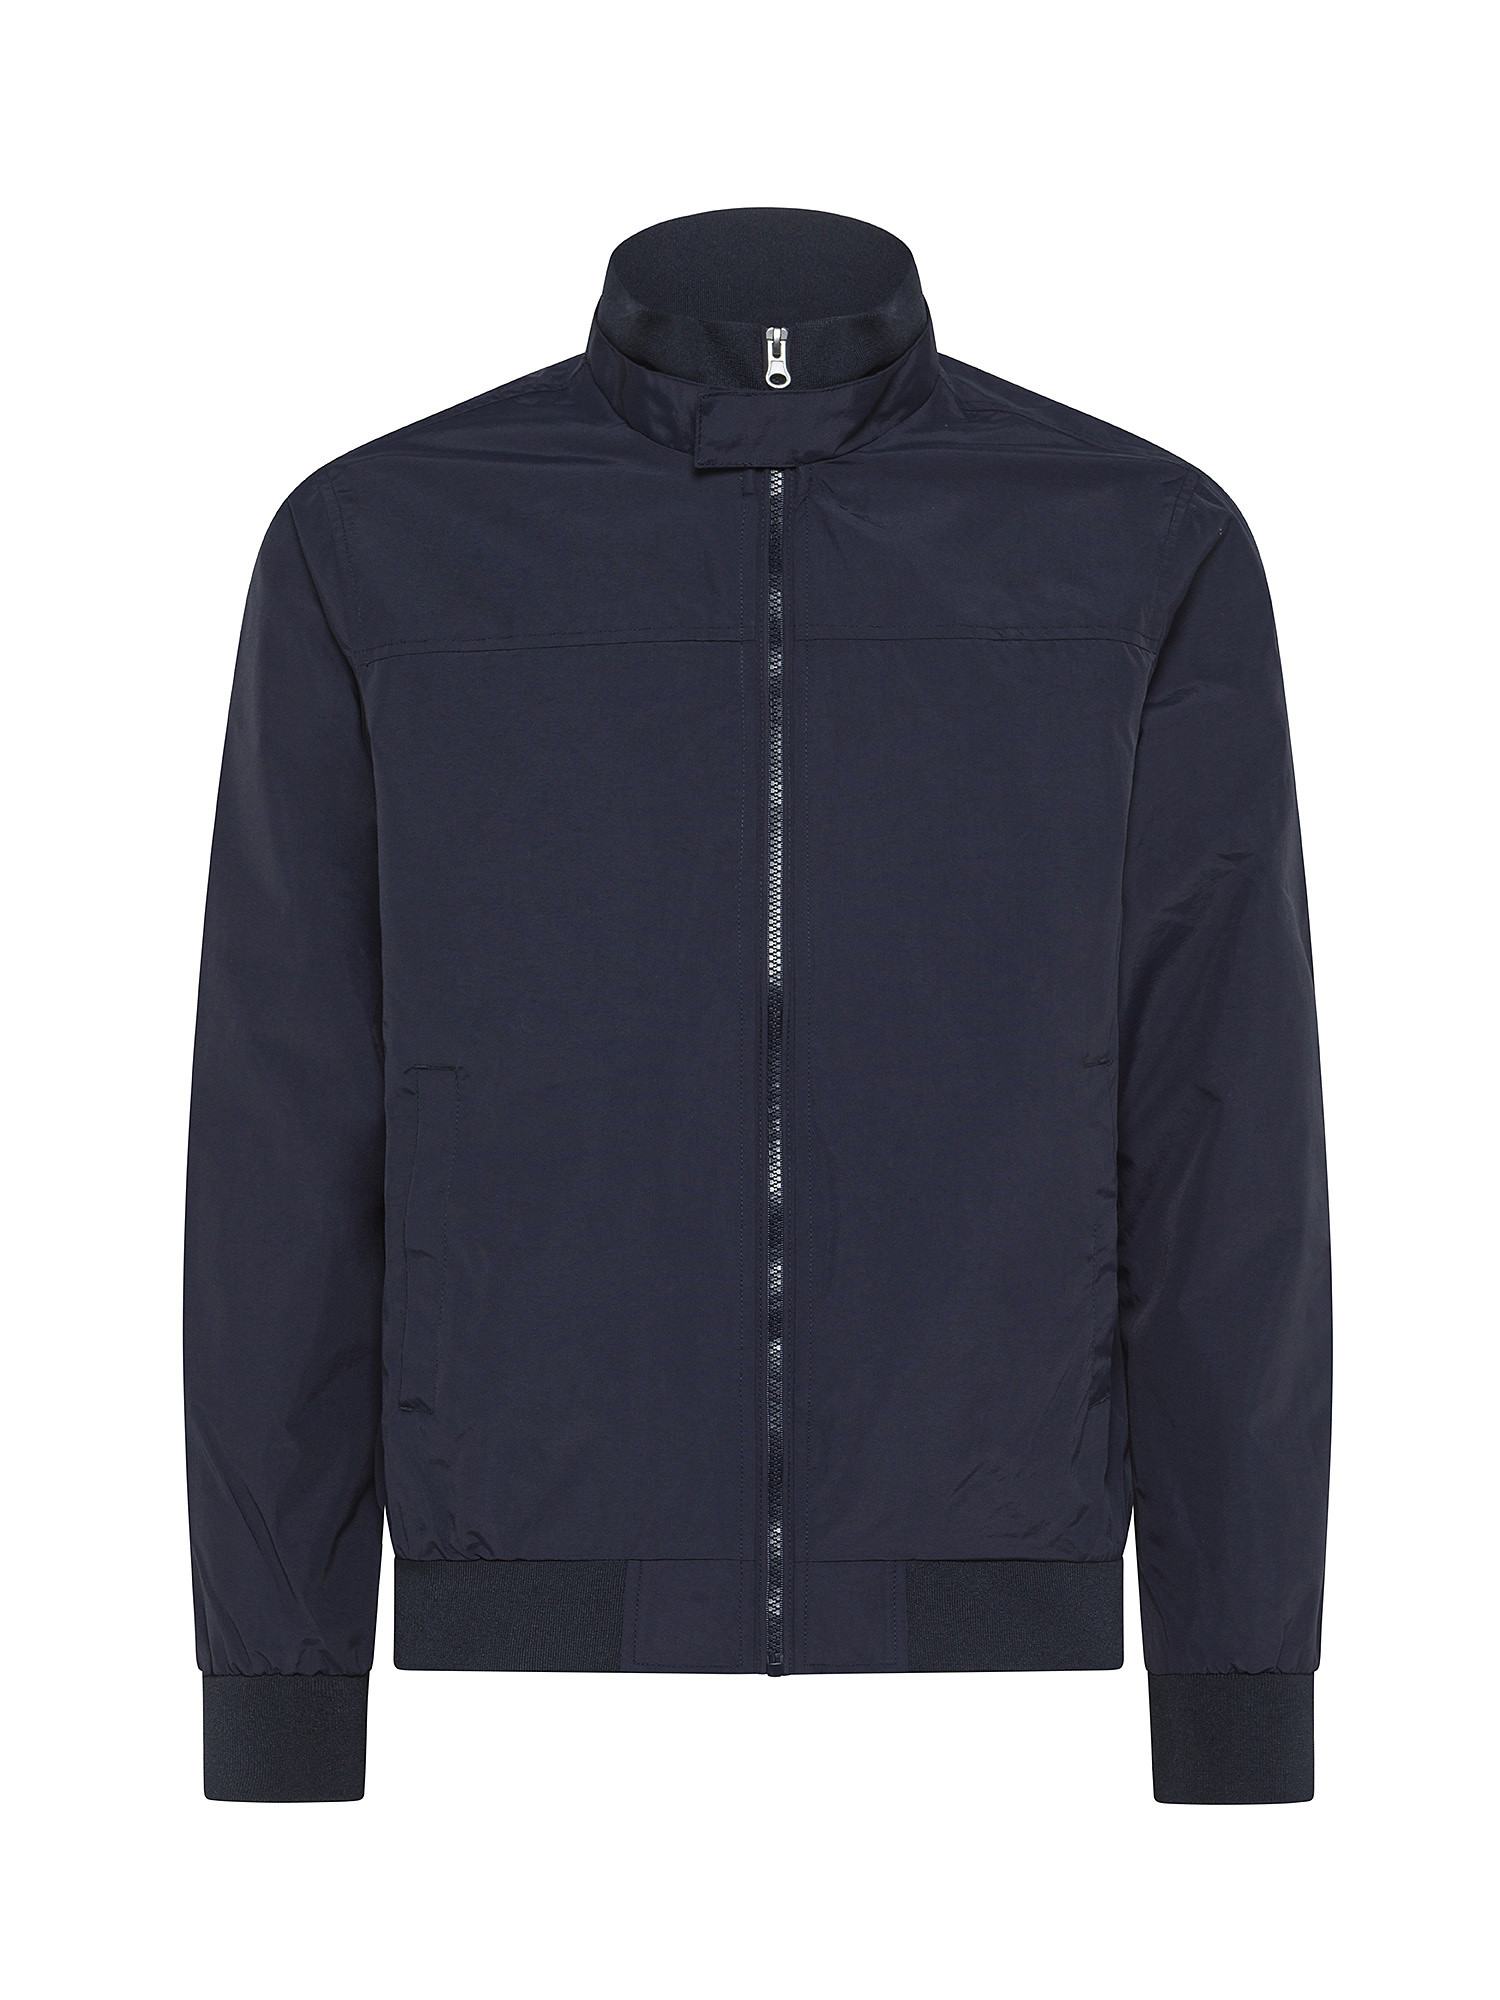 JCT - Full zip jacket, Dark Blue, large image number 0